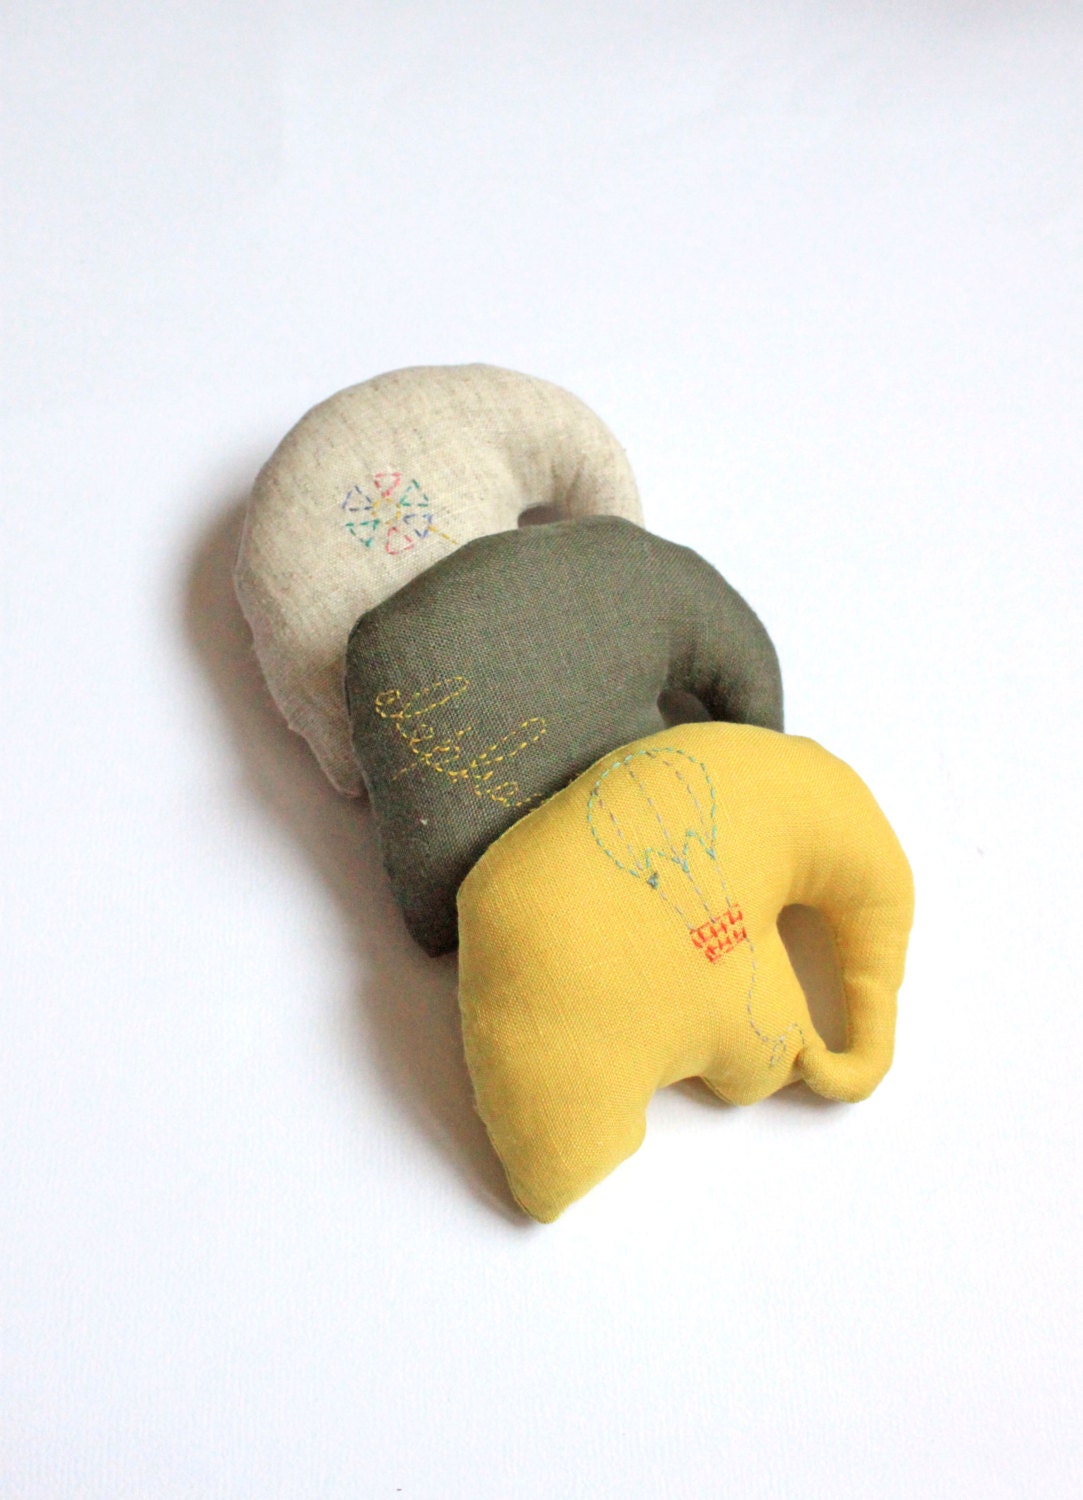 Fabric elephant home decor ornament - MiracleInspiration